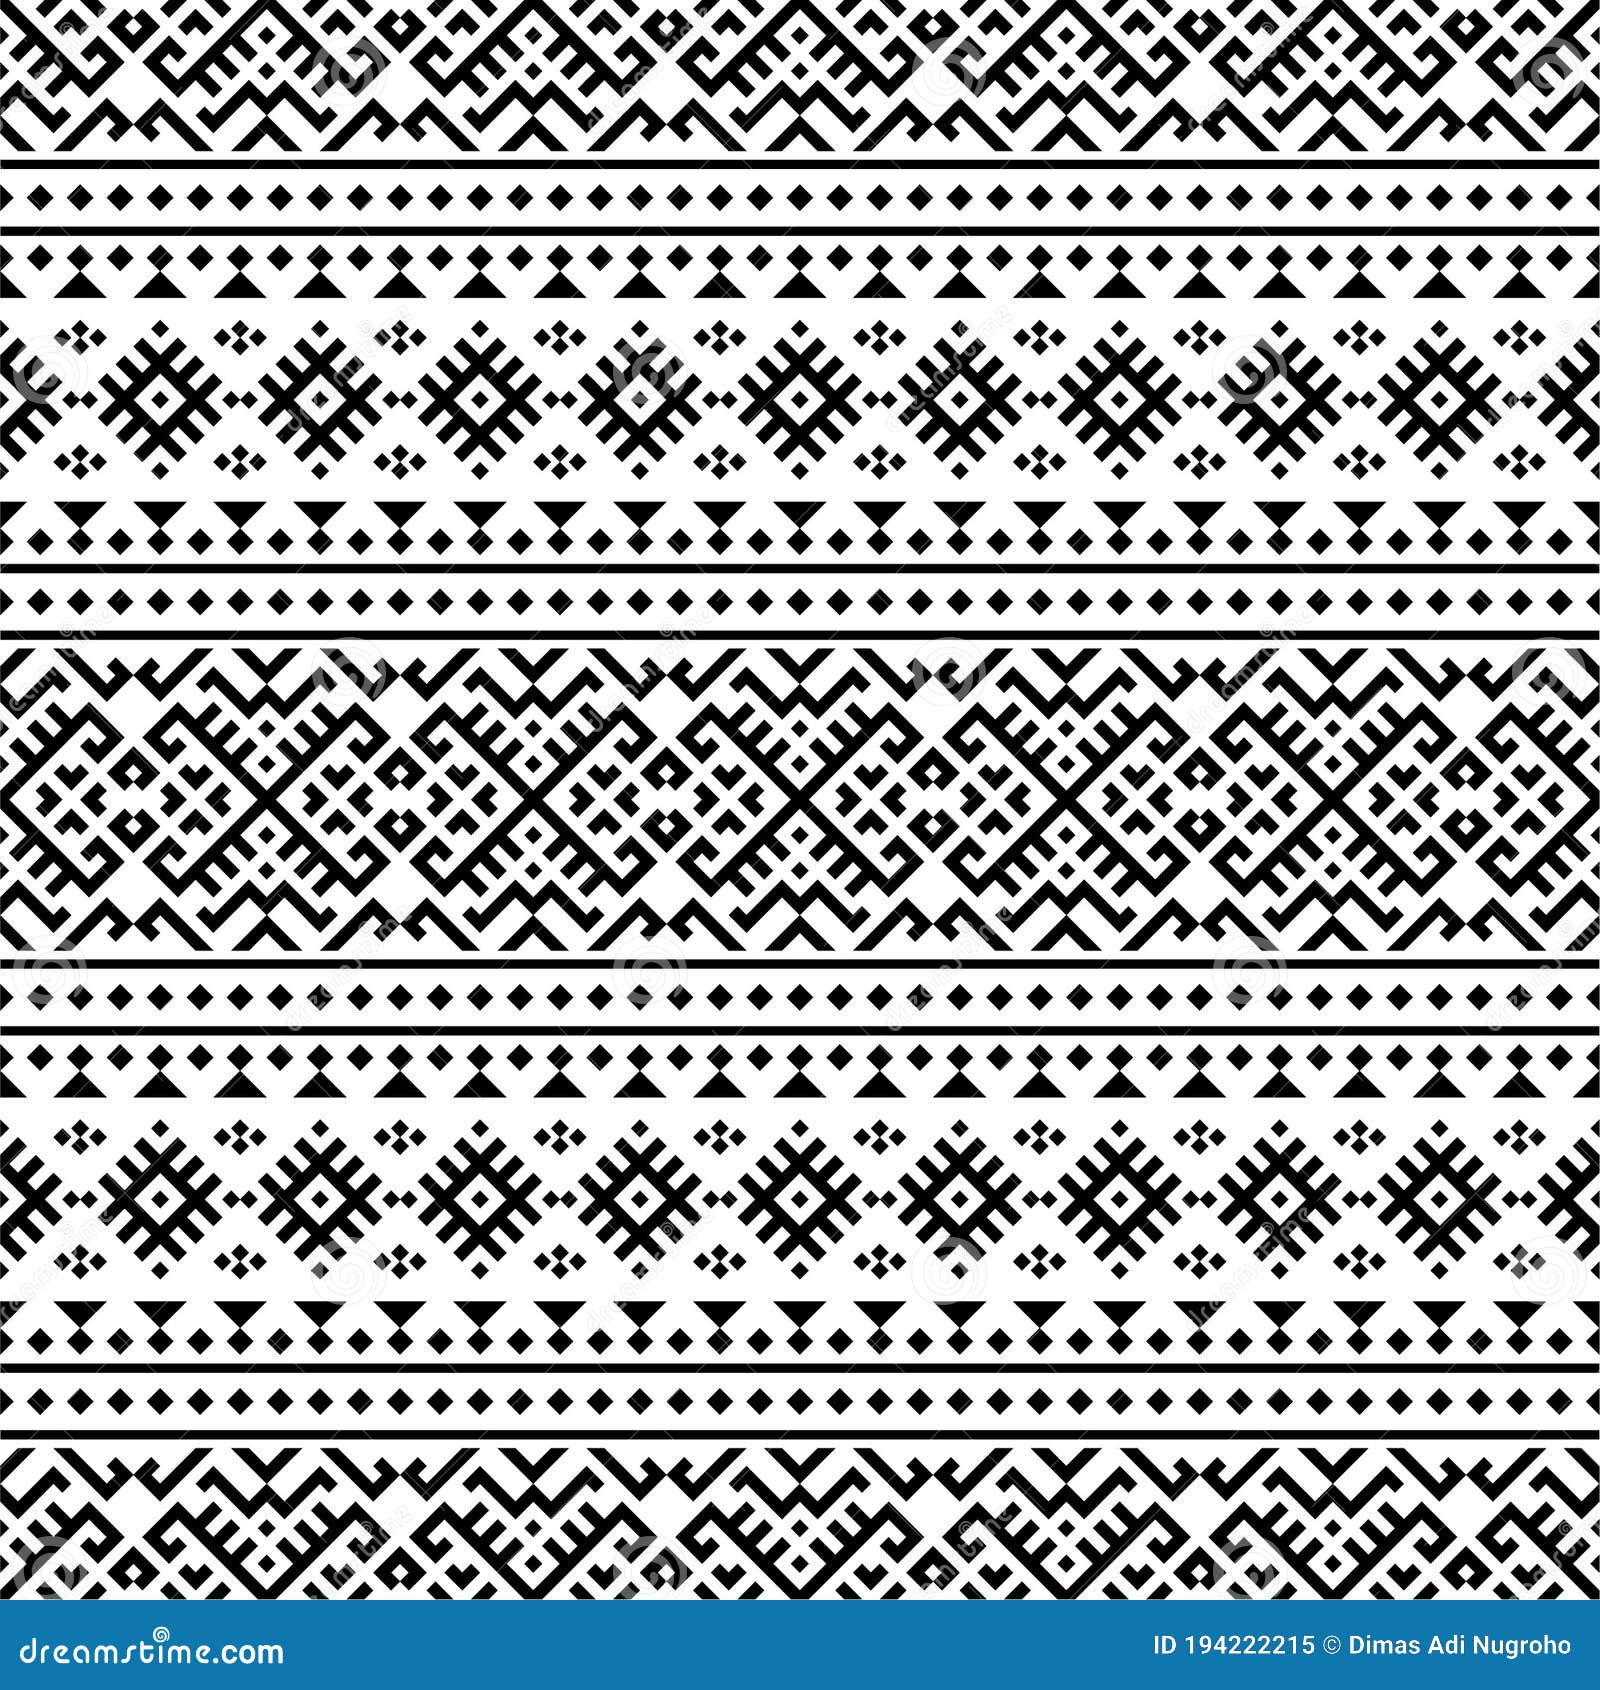 Tribal Ethnic Aztec Pattern Illustration Design Texture Background in ...